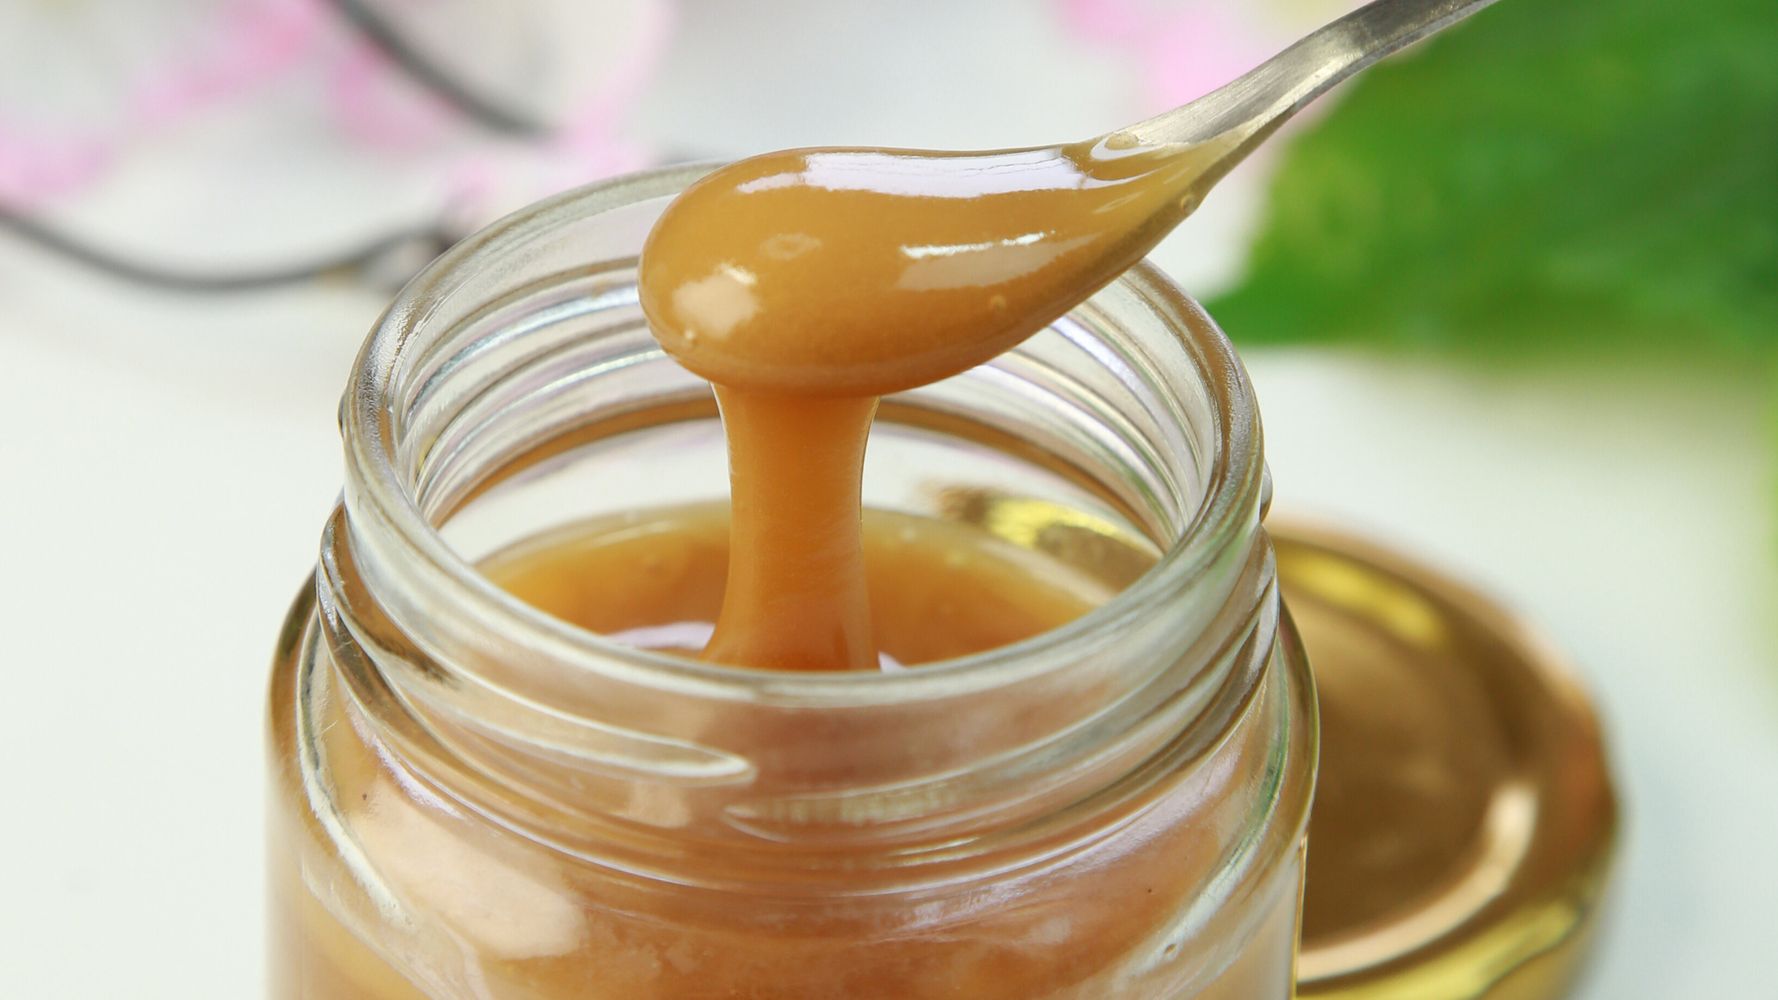 Japan Warns it Will Block New Zealand Honey Shipments if Glyphosate Limits Breached